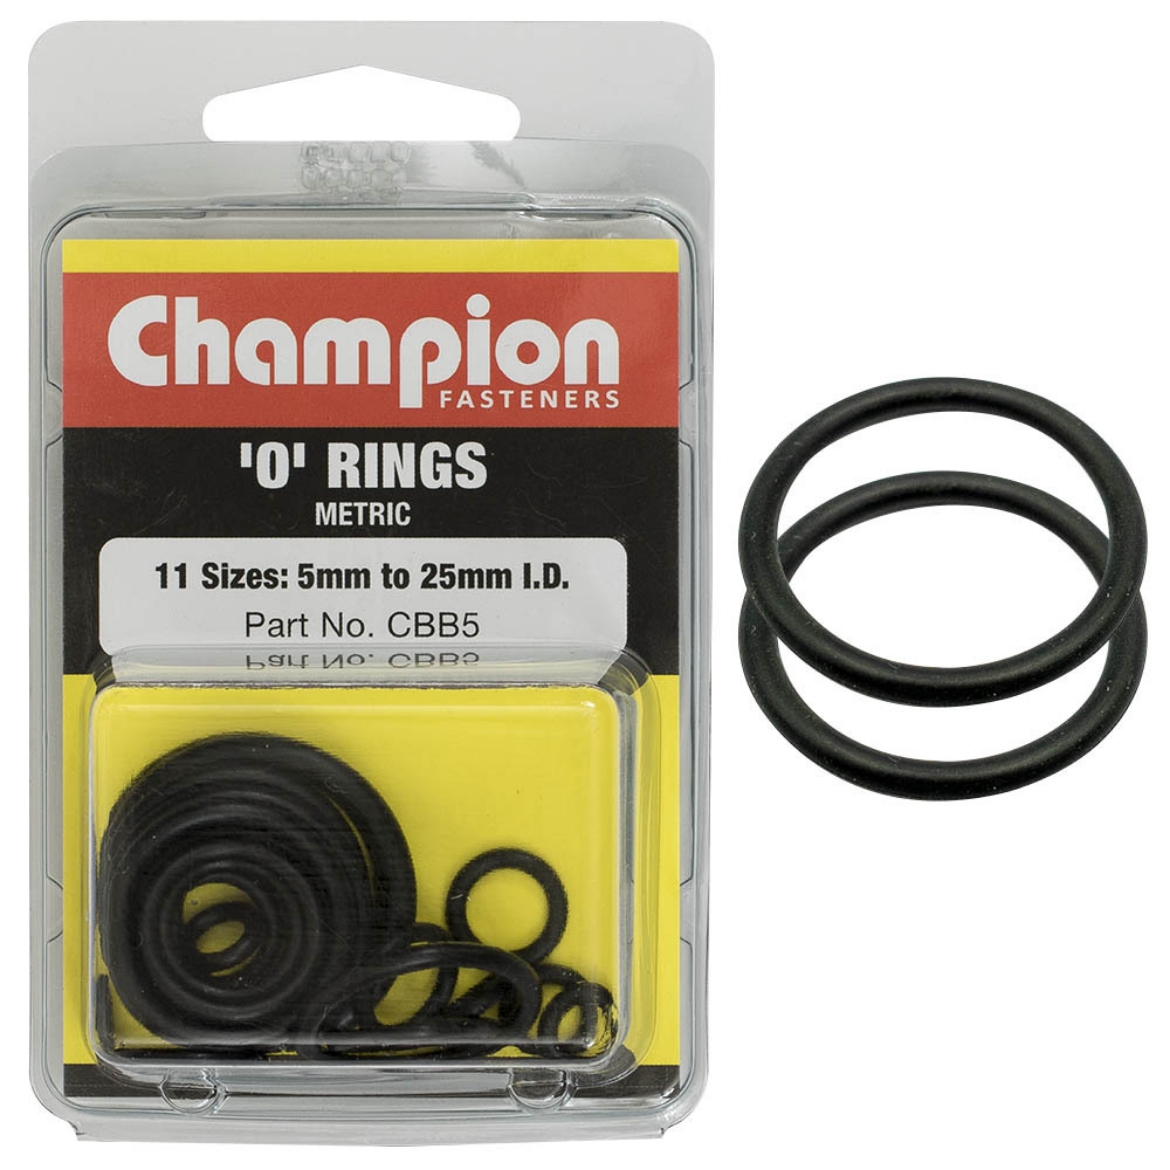 Tippmann X7 Paintball Marker O-ring Oring Kit x 4 rebuilds / kits | eBay